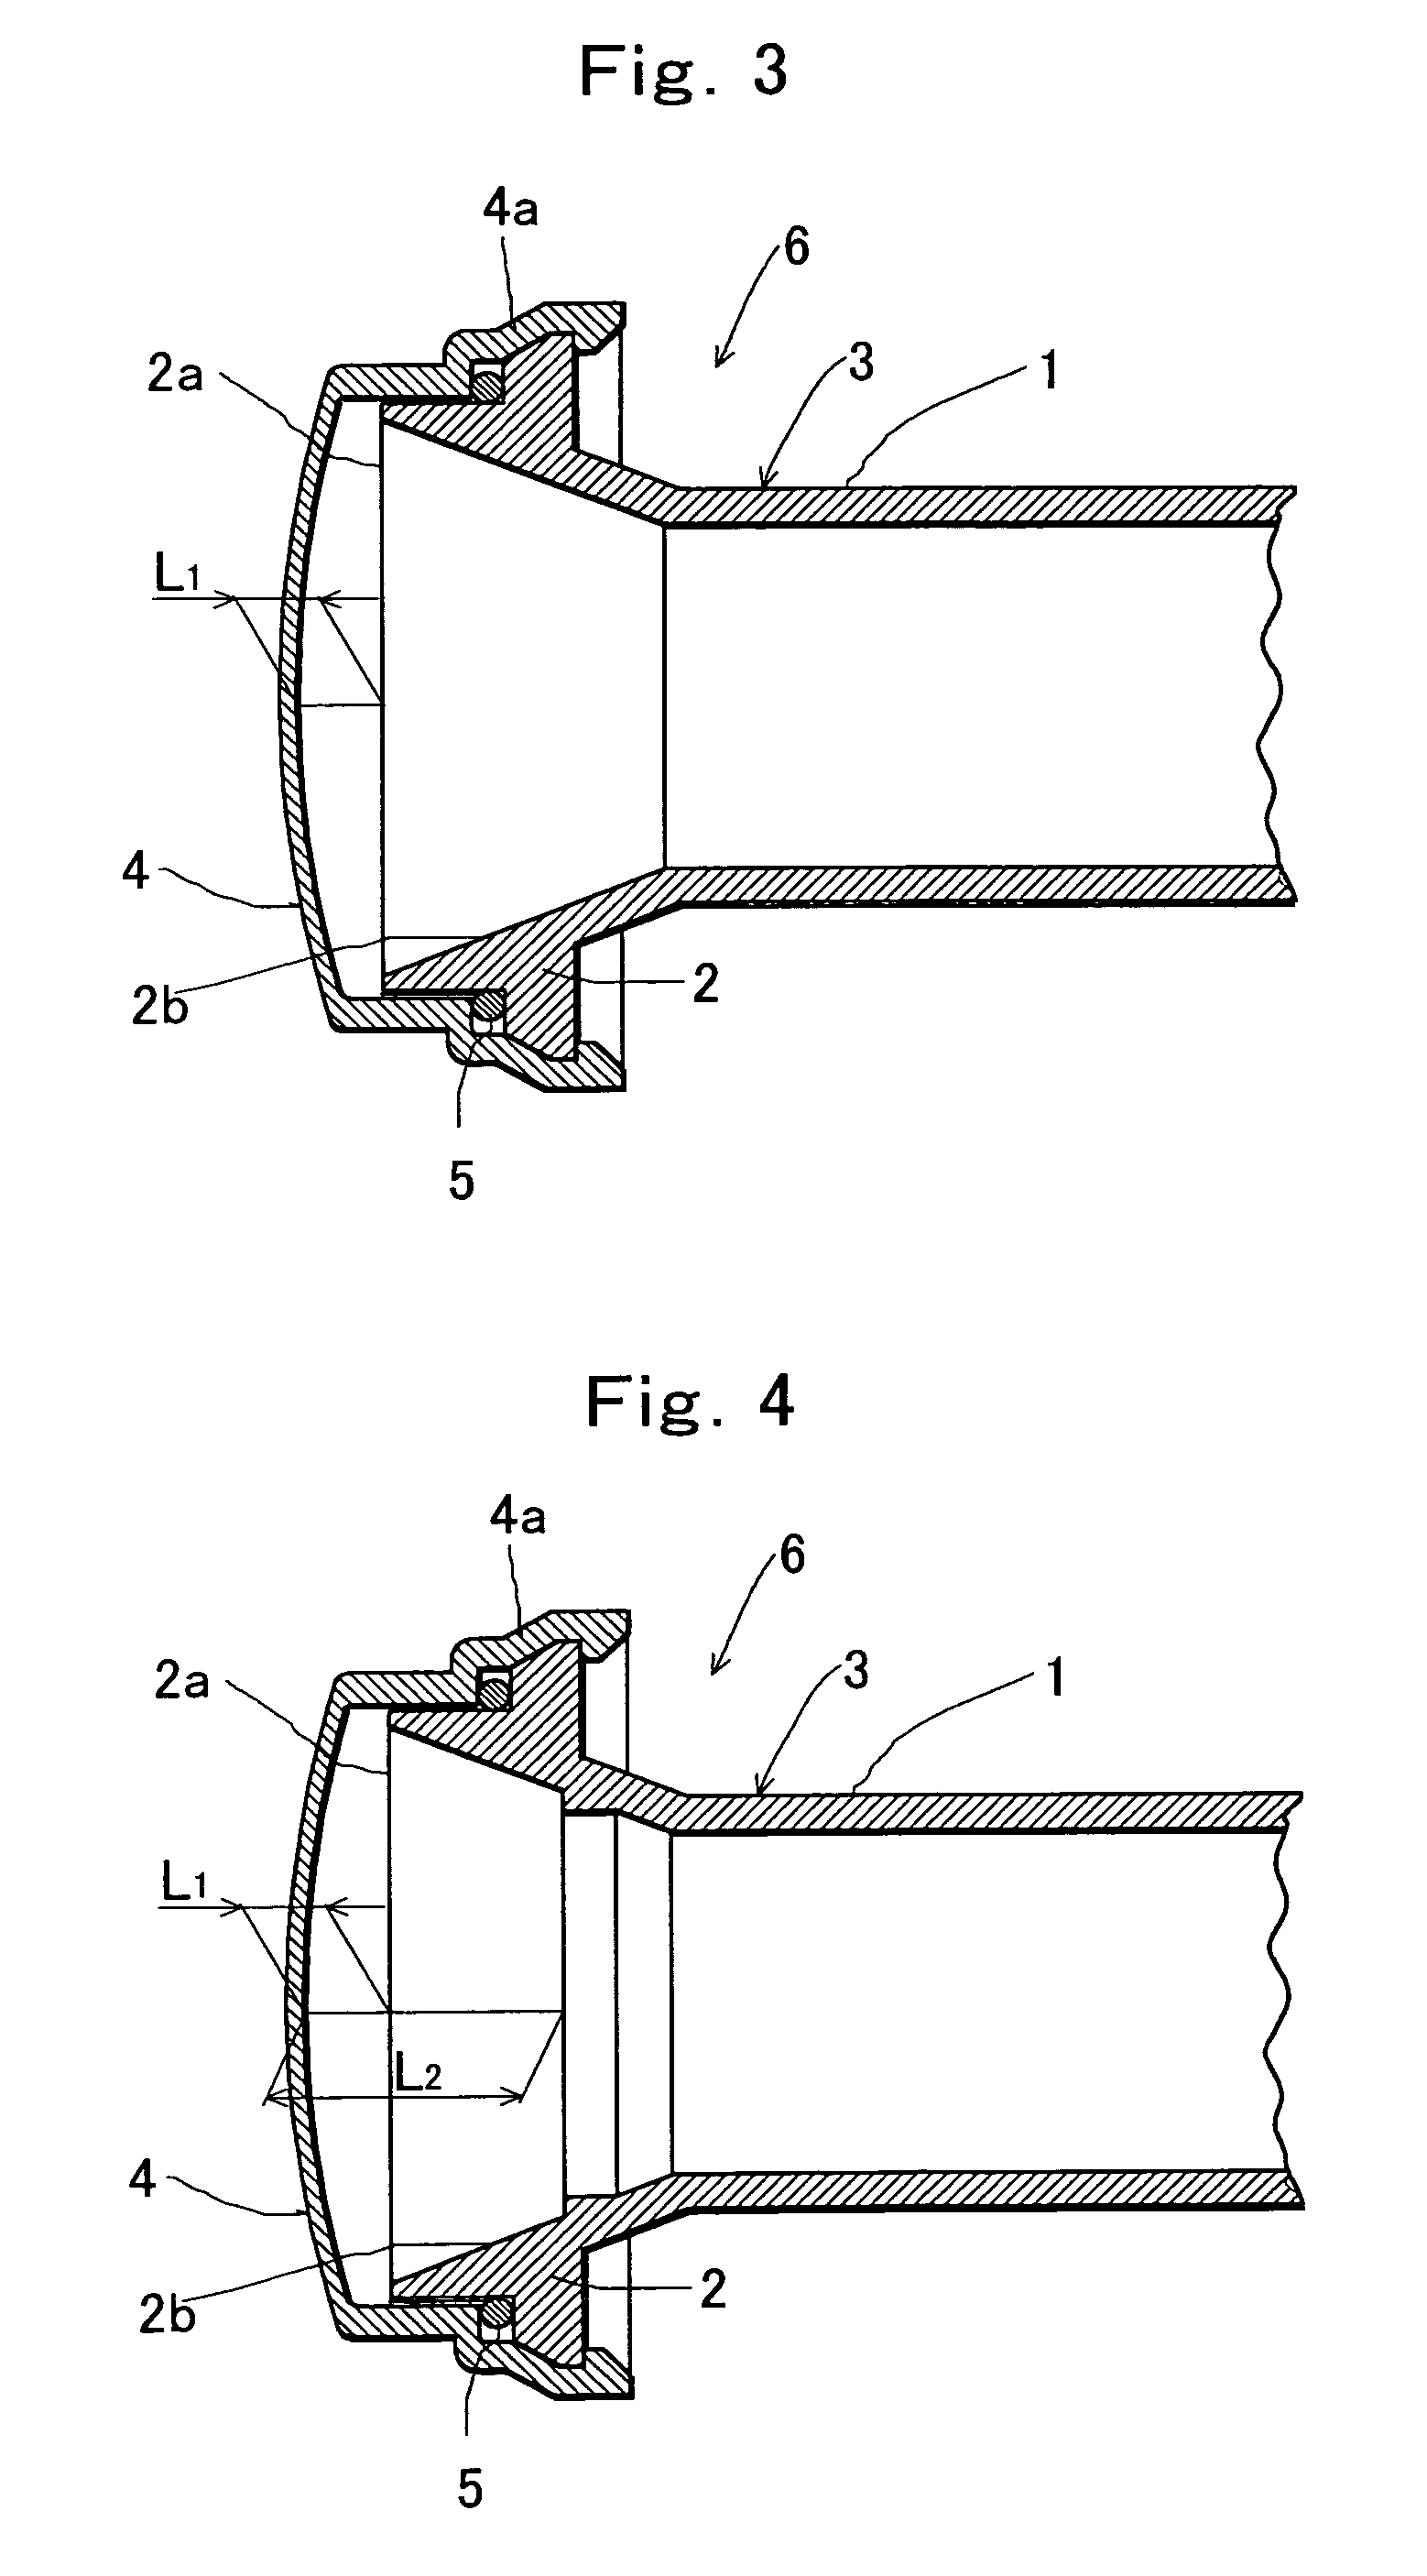 Primary radiator for parabolic antenna